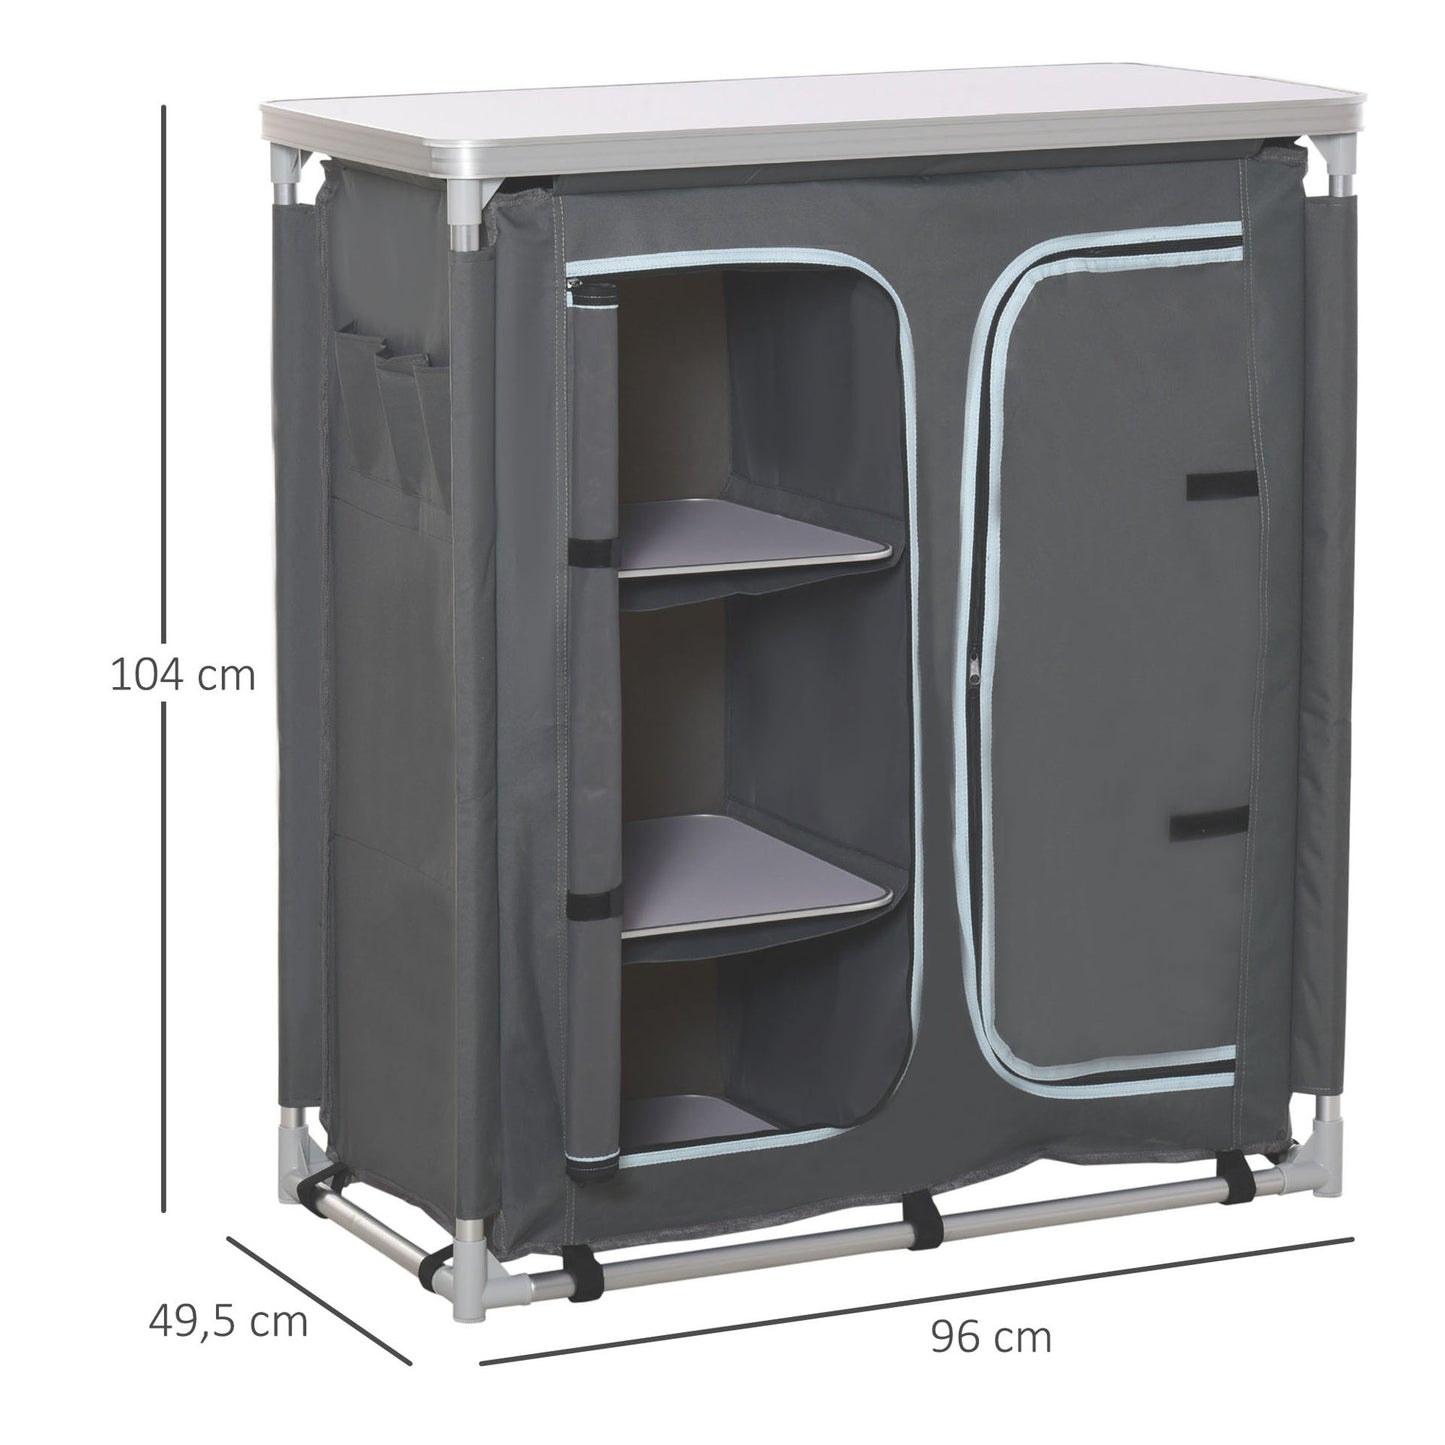 Nancy's Agincourt Camping Cupboard Portable Kitchen Box - Grijs - Aluminium, Oxford Stof, Mdf - 37,79 cm x 19,48 cm x 40,94 cm